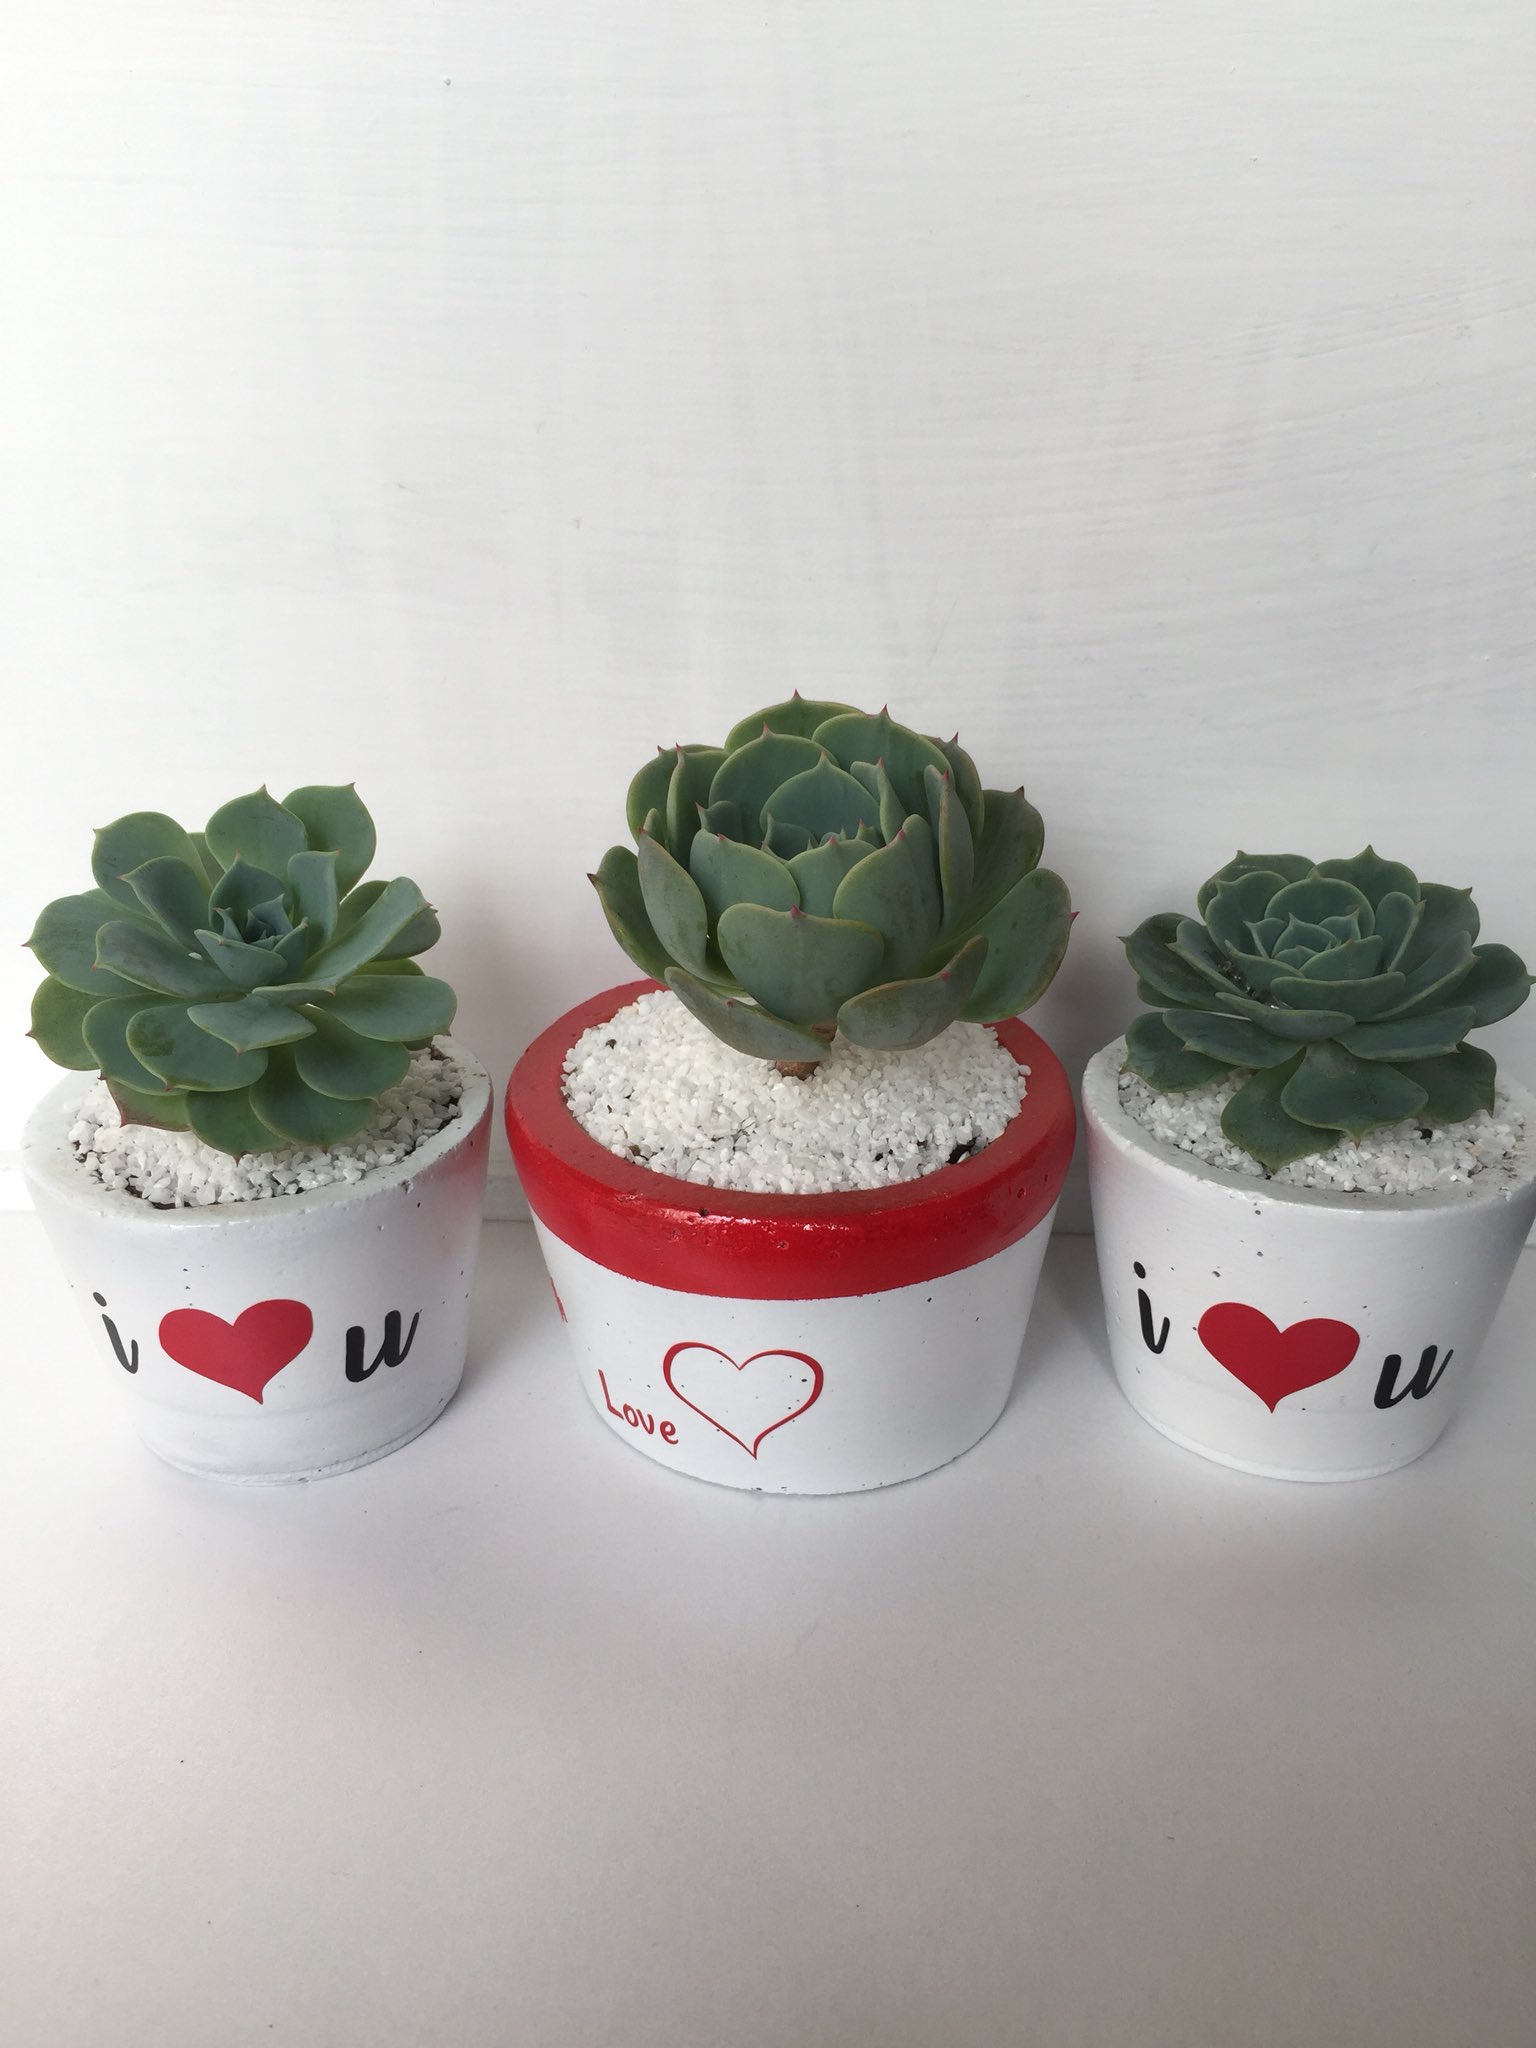 santo Extracto tienda BotánicaCDMX Twitter पर: "Mini macetas de concreto personalizadas con  suculentas para interiores. #suculentas #cactus #crasas #natural  #hechoenmexico #homemade #detalles #gift https://t.co/49jNi1FLLn" / Twitter